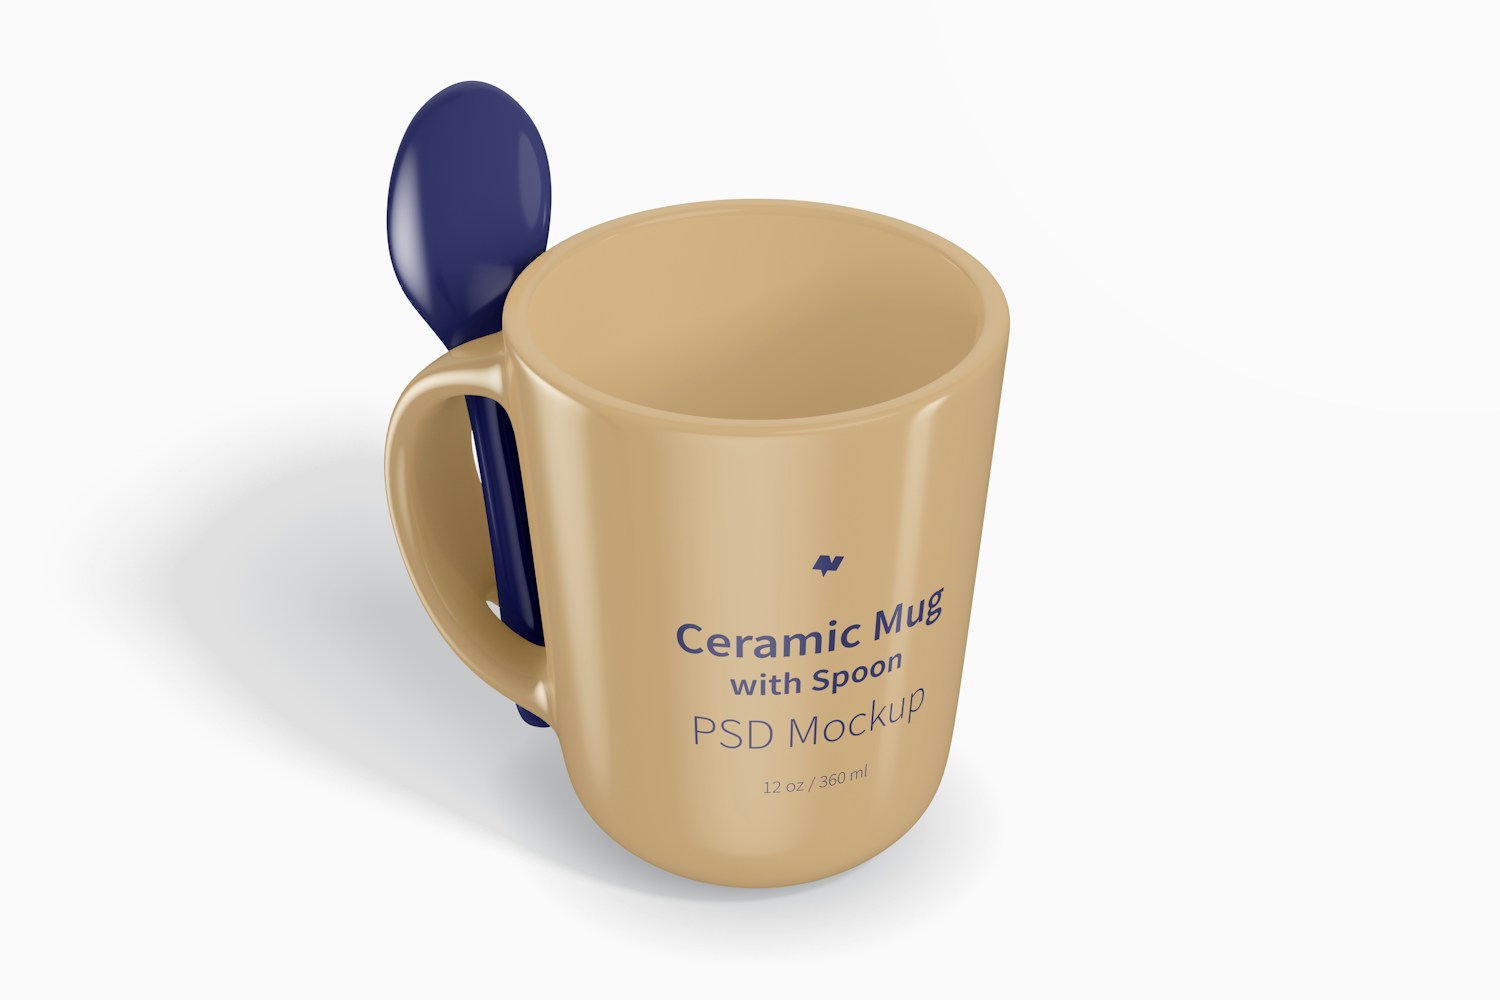 12 oz Ceramic Mug with Spoon Mockup, Isometric Right View